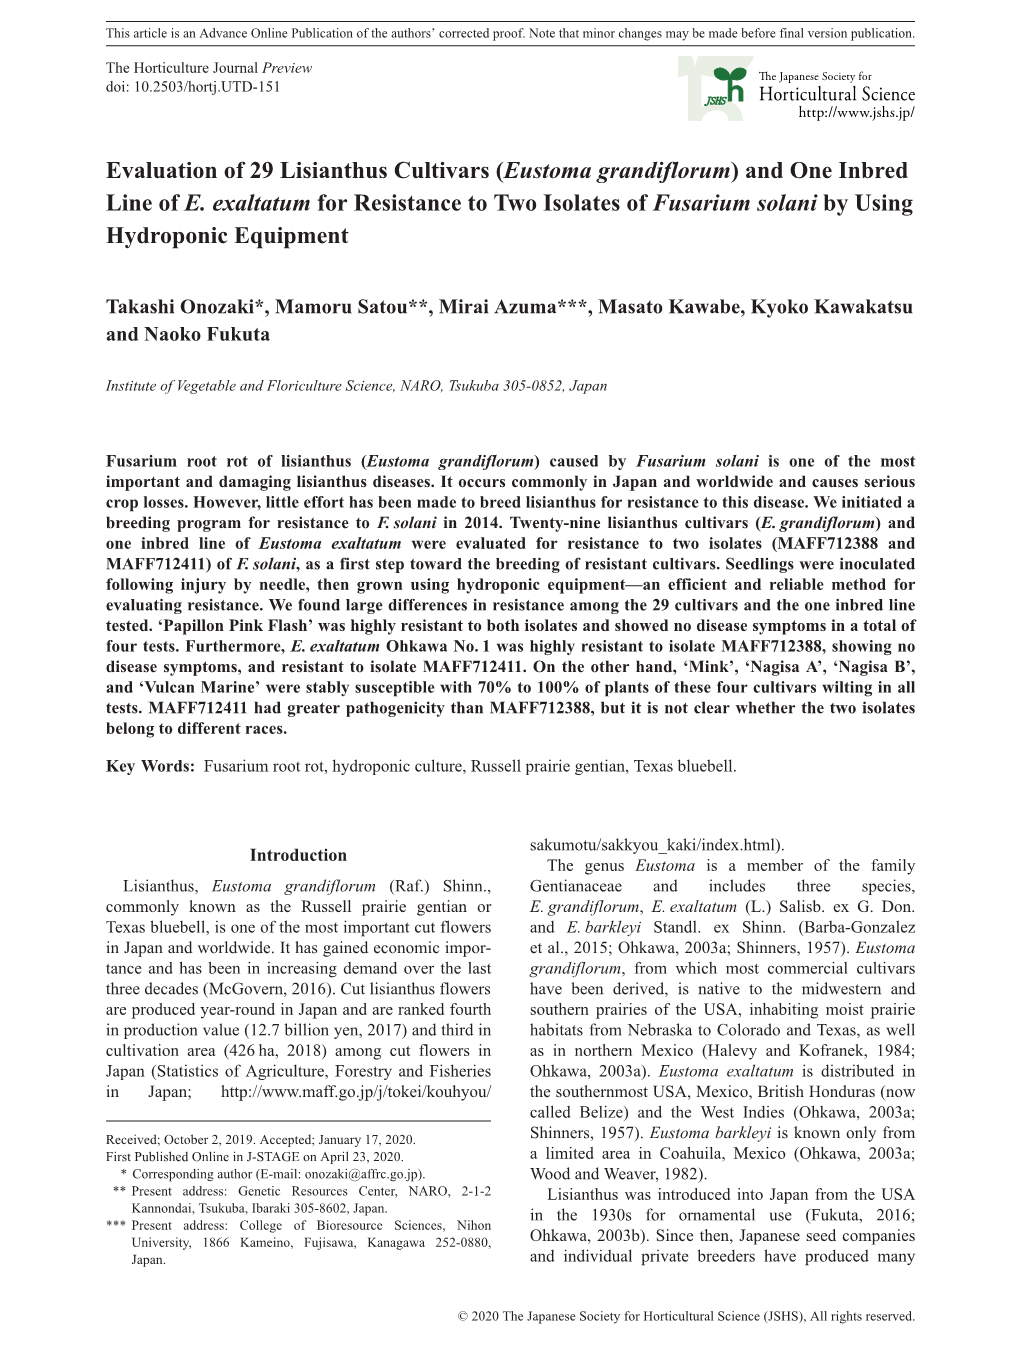 Evaluation of 29 Lisianthus Cultivars (Eustoma Grandiflorum) and One Inbred Line of E